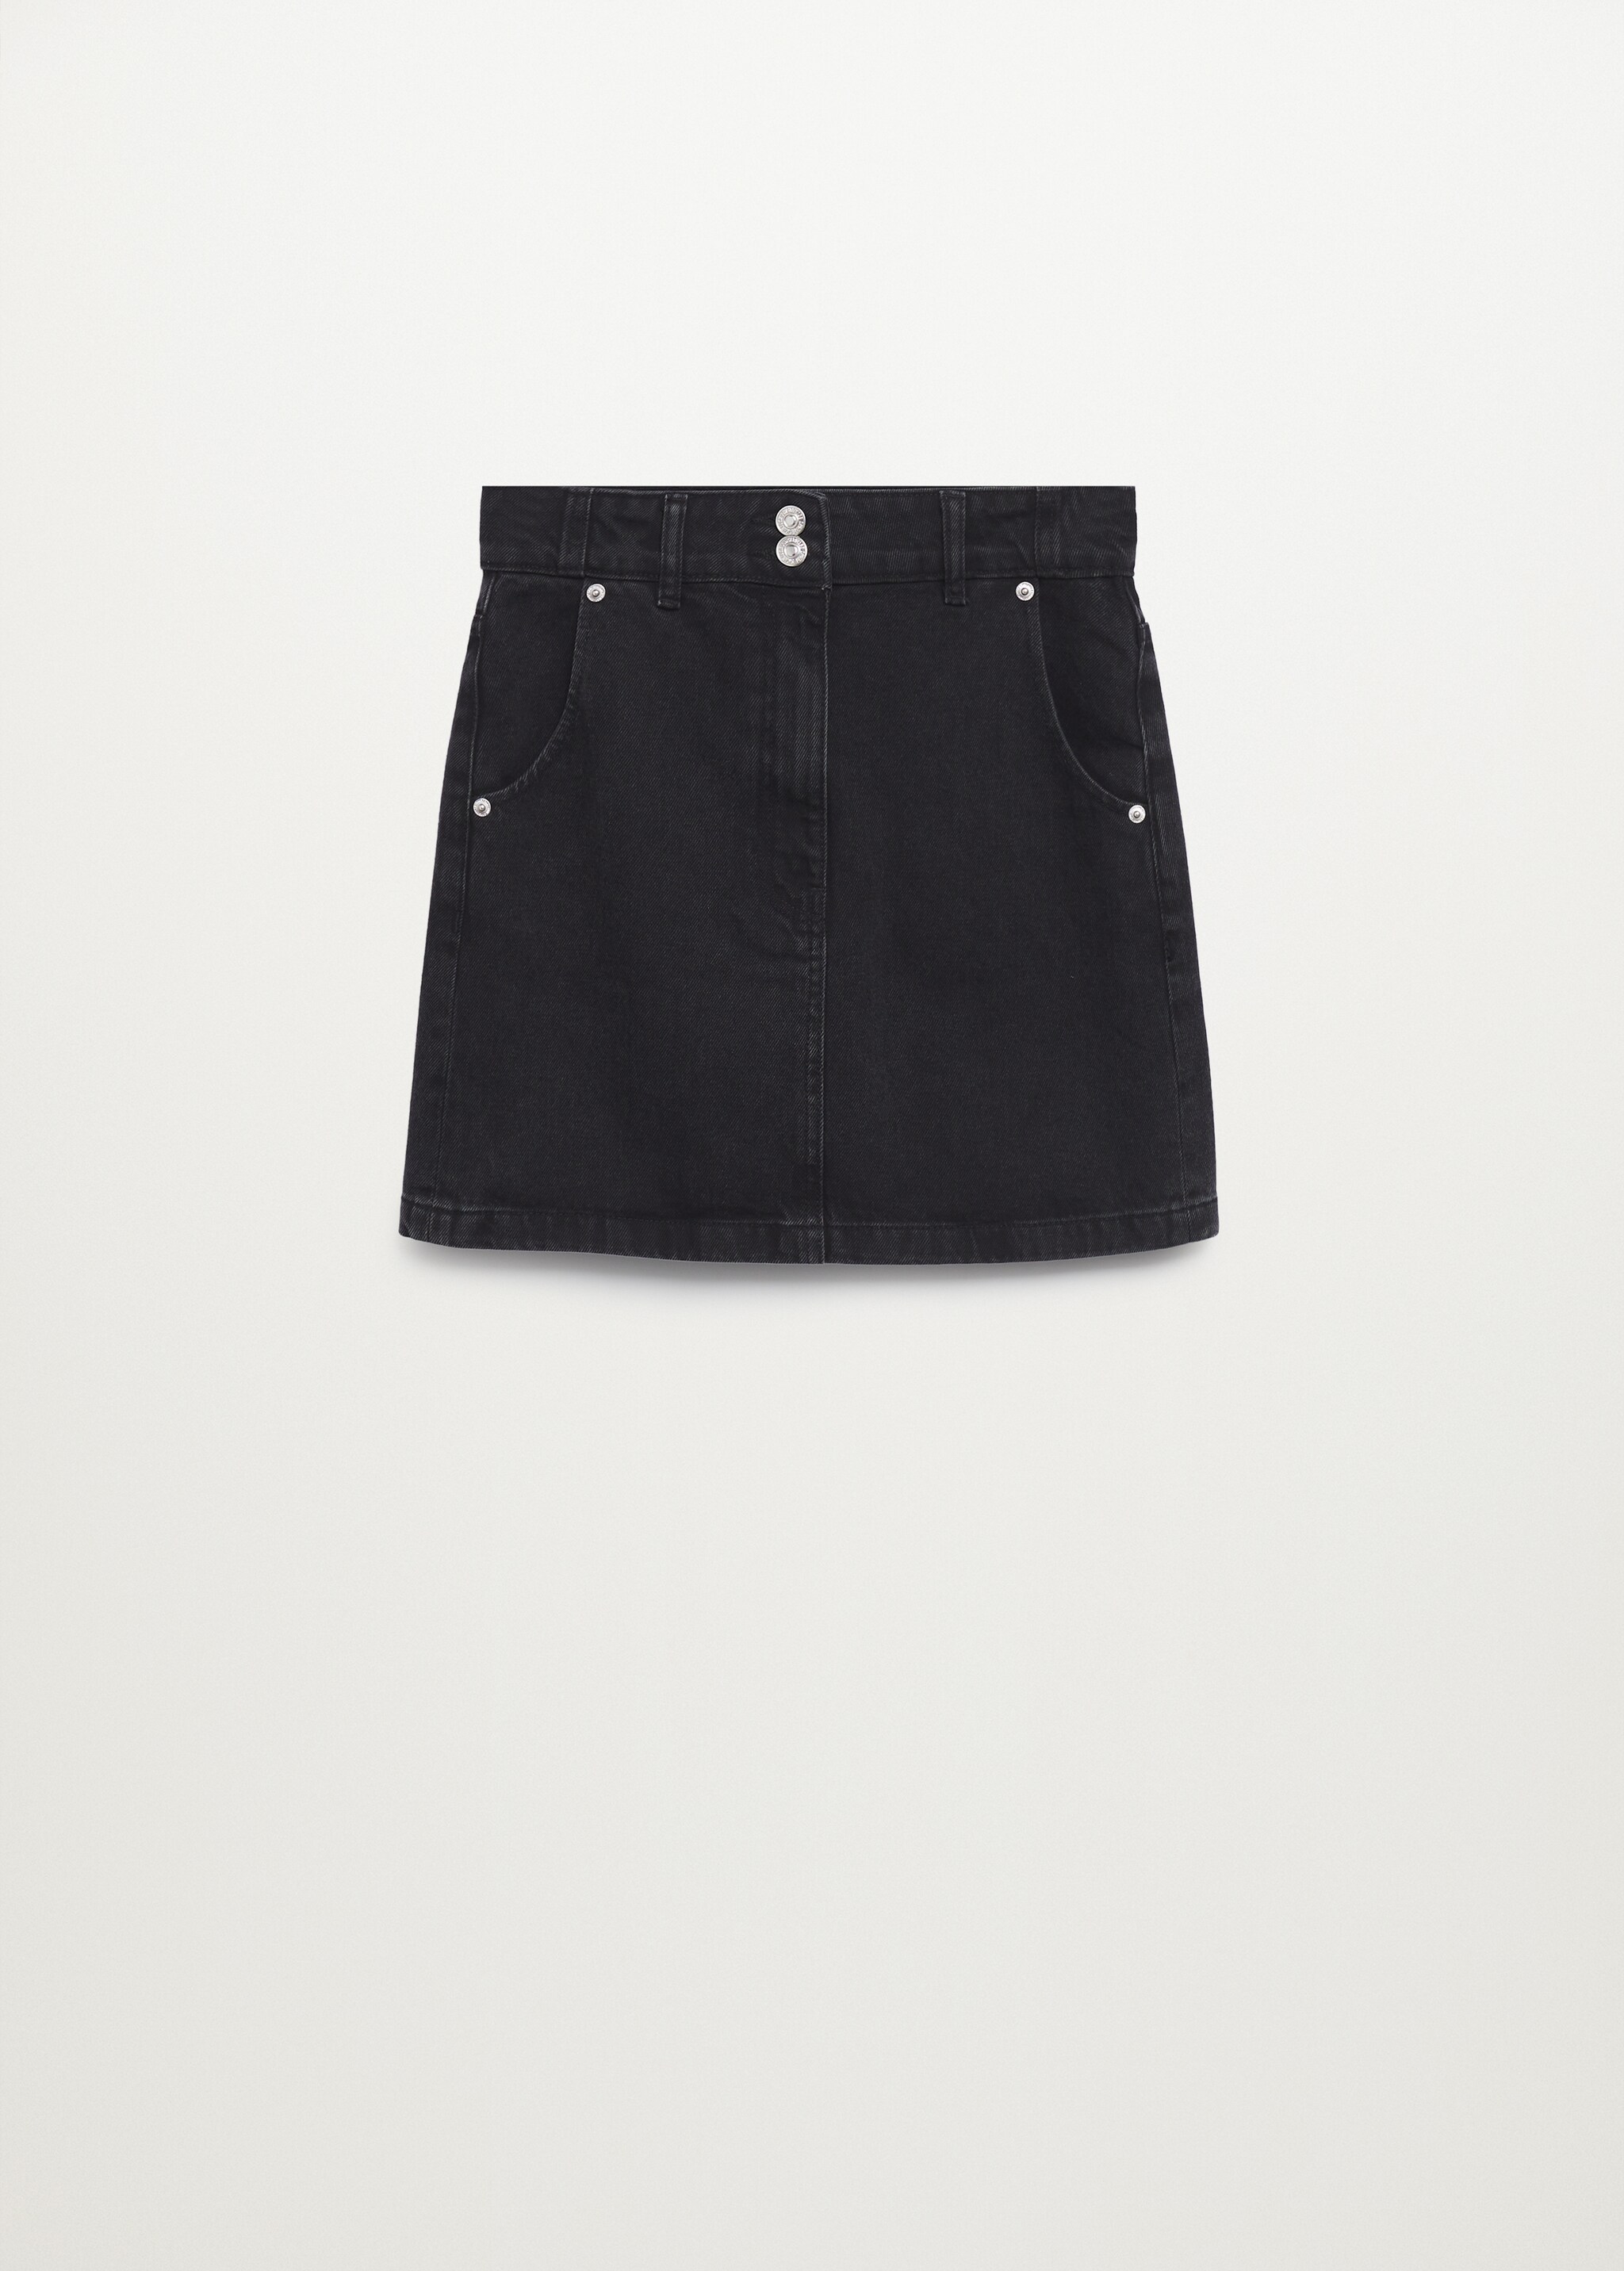 Minifalda denim bolsillos - Artículo sin modelo